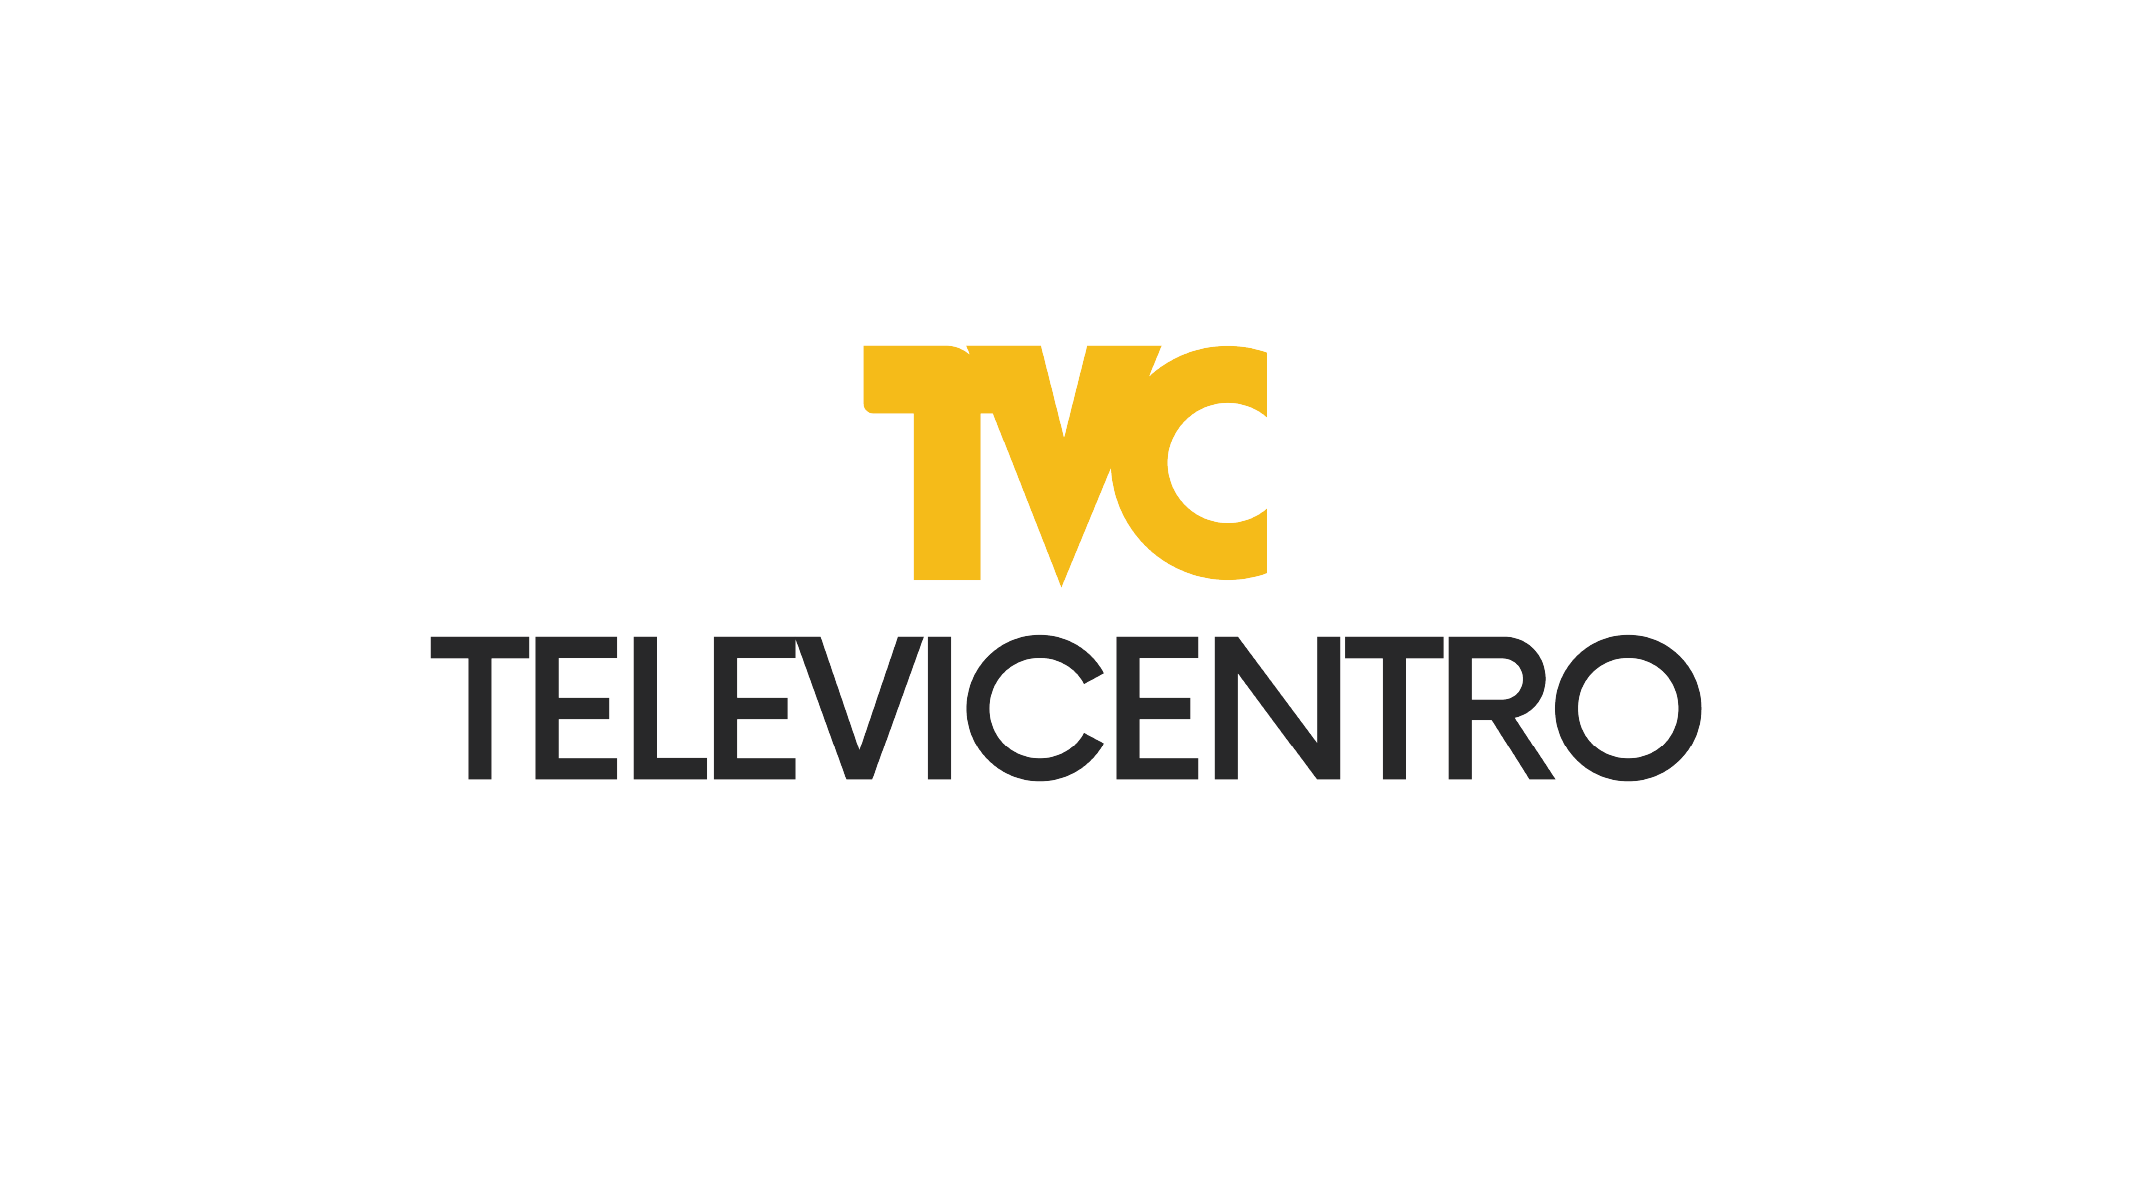 Televicentro